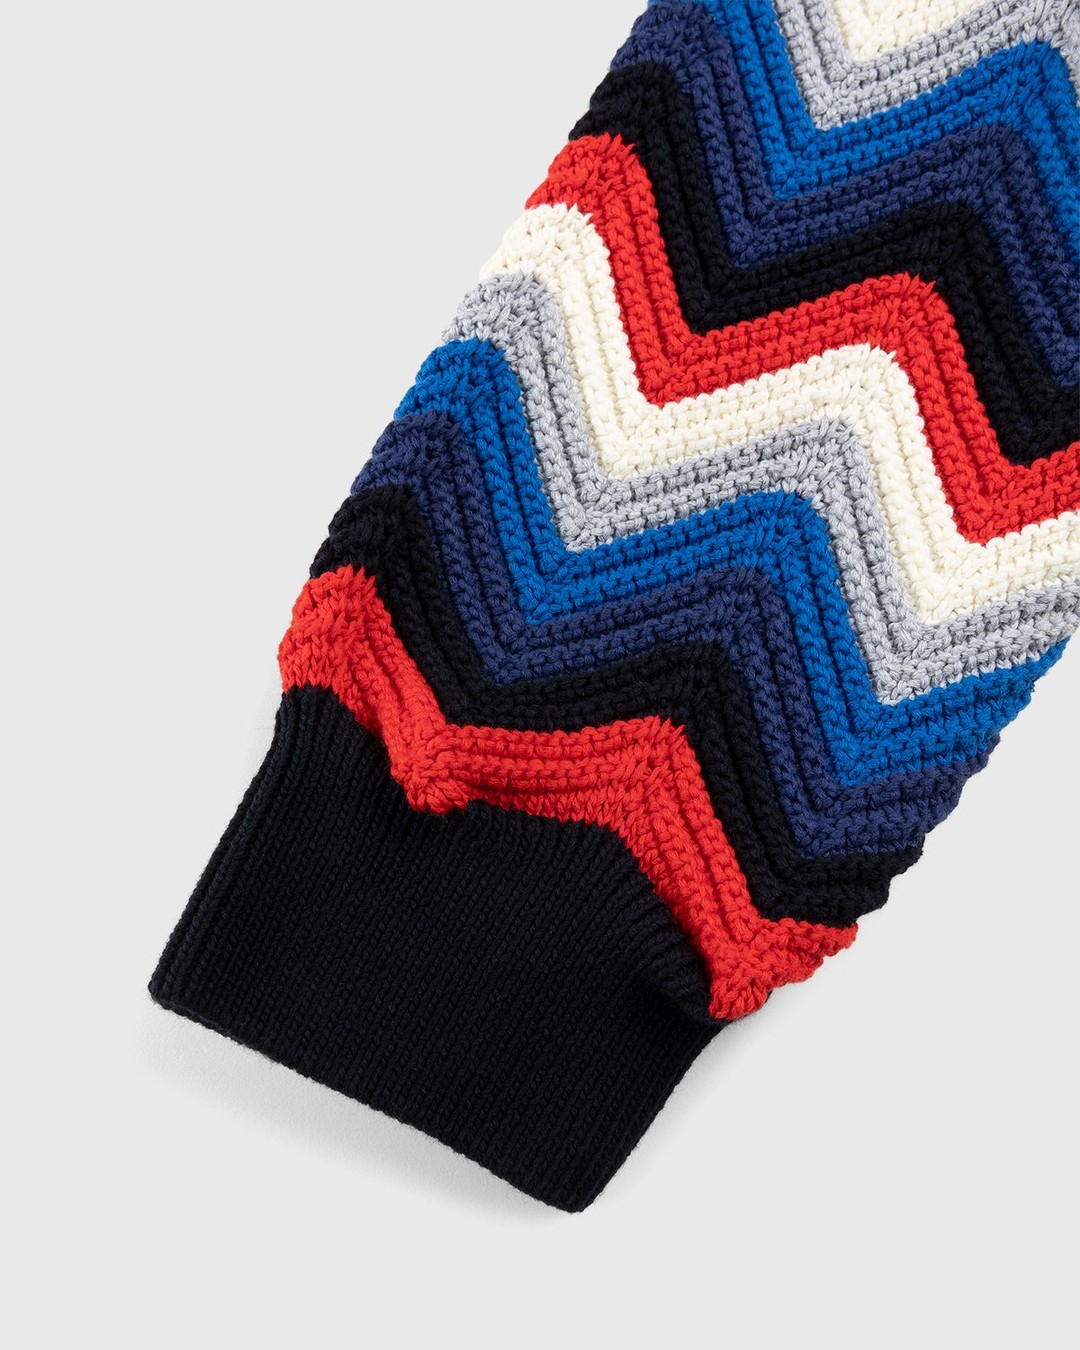 Missoni – Wavy Cotton Cardigan Multi - Knitwear - Multi - Image 7